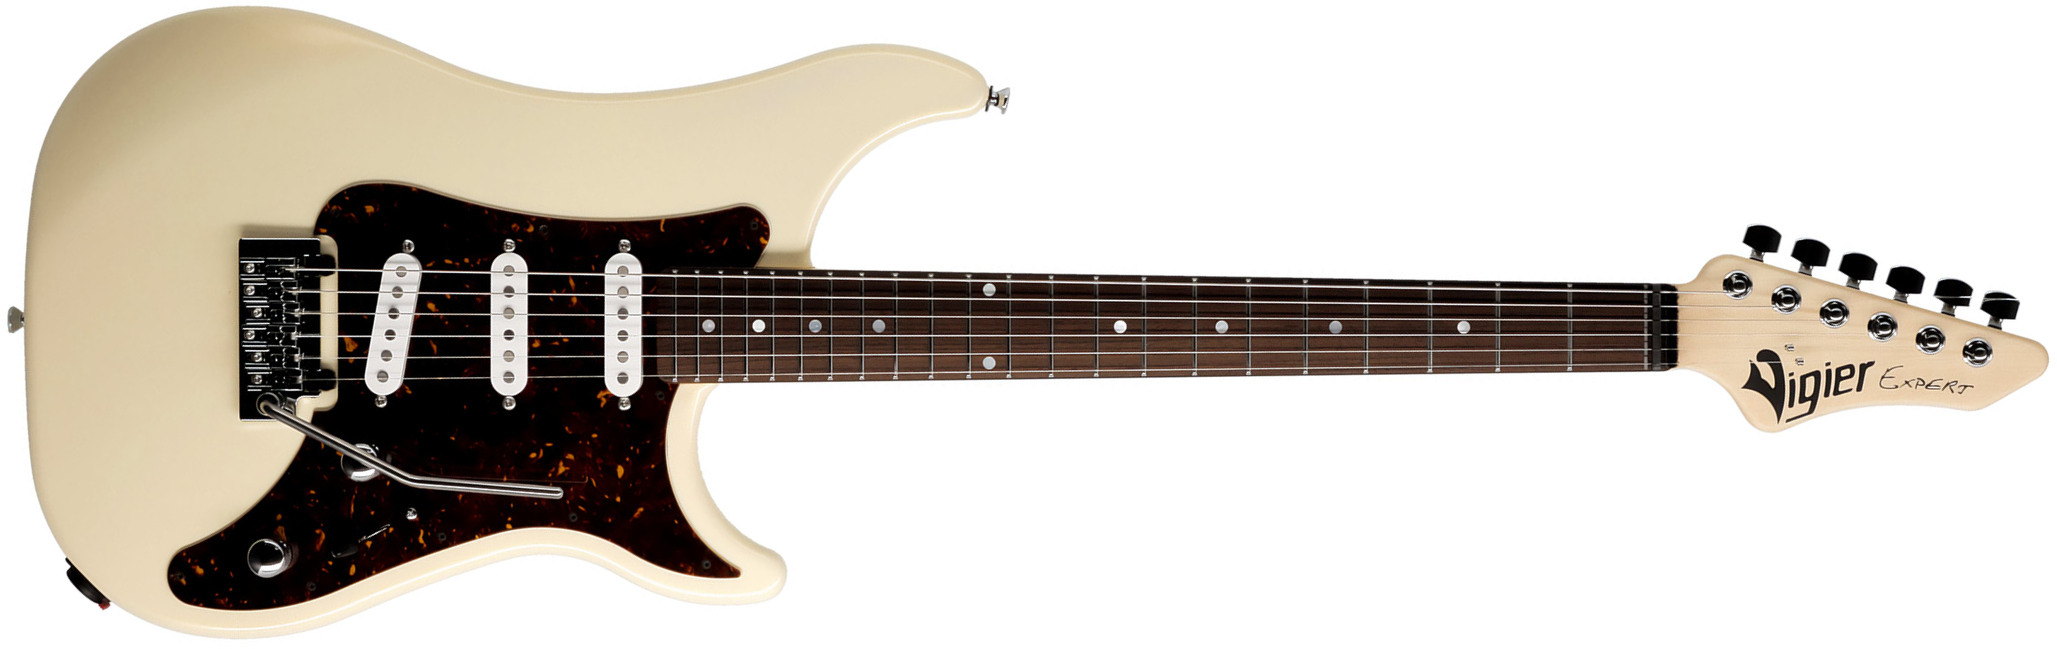 Vigier Expert Classic Rock 3s Trem Rw - Retro White - Guitarra eléctrica con forma de str. - Main picture